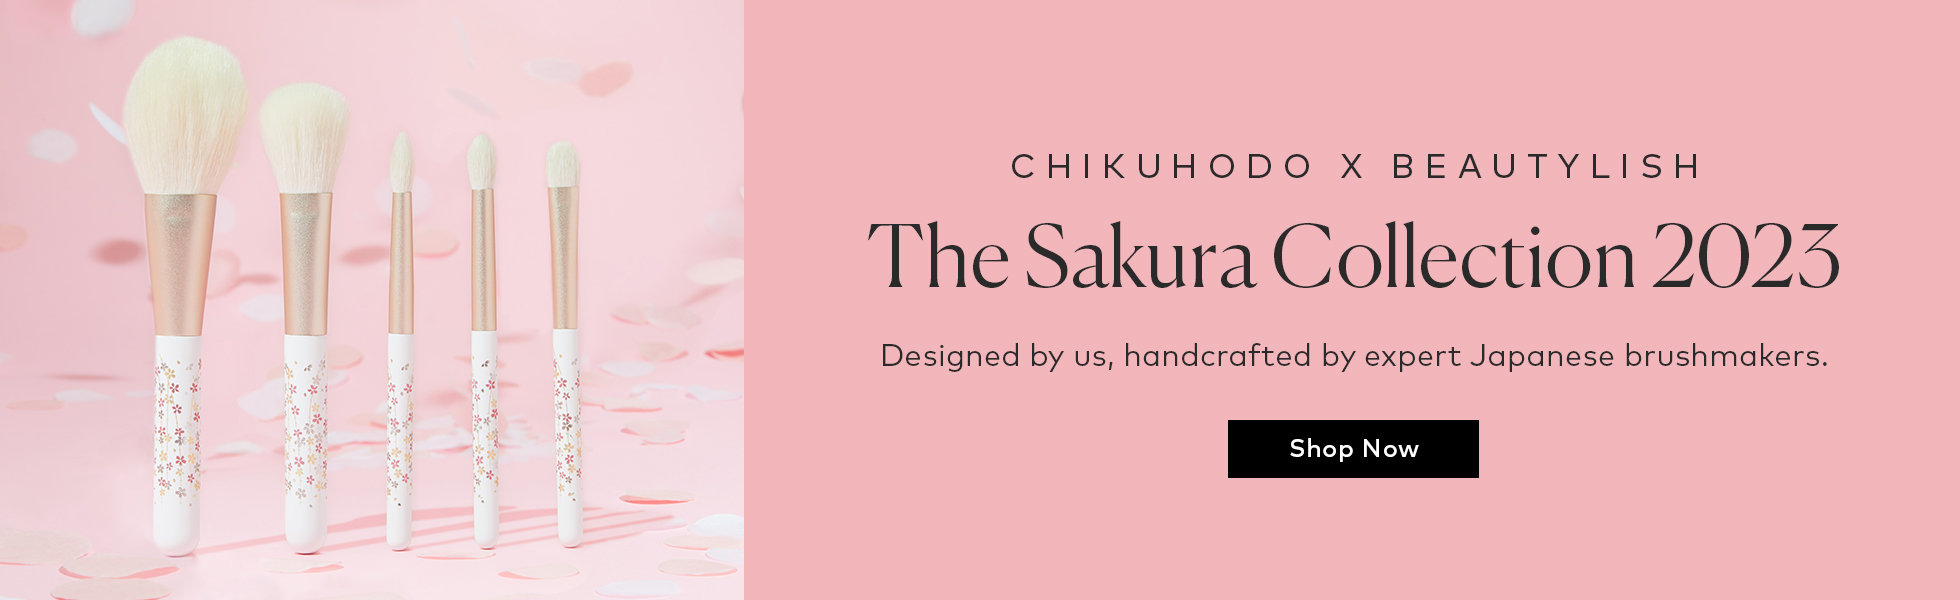 Shop the new CHIKUHODO Sakura Collection now at Beautylish.com